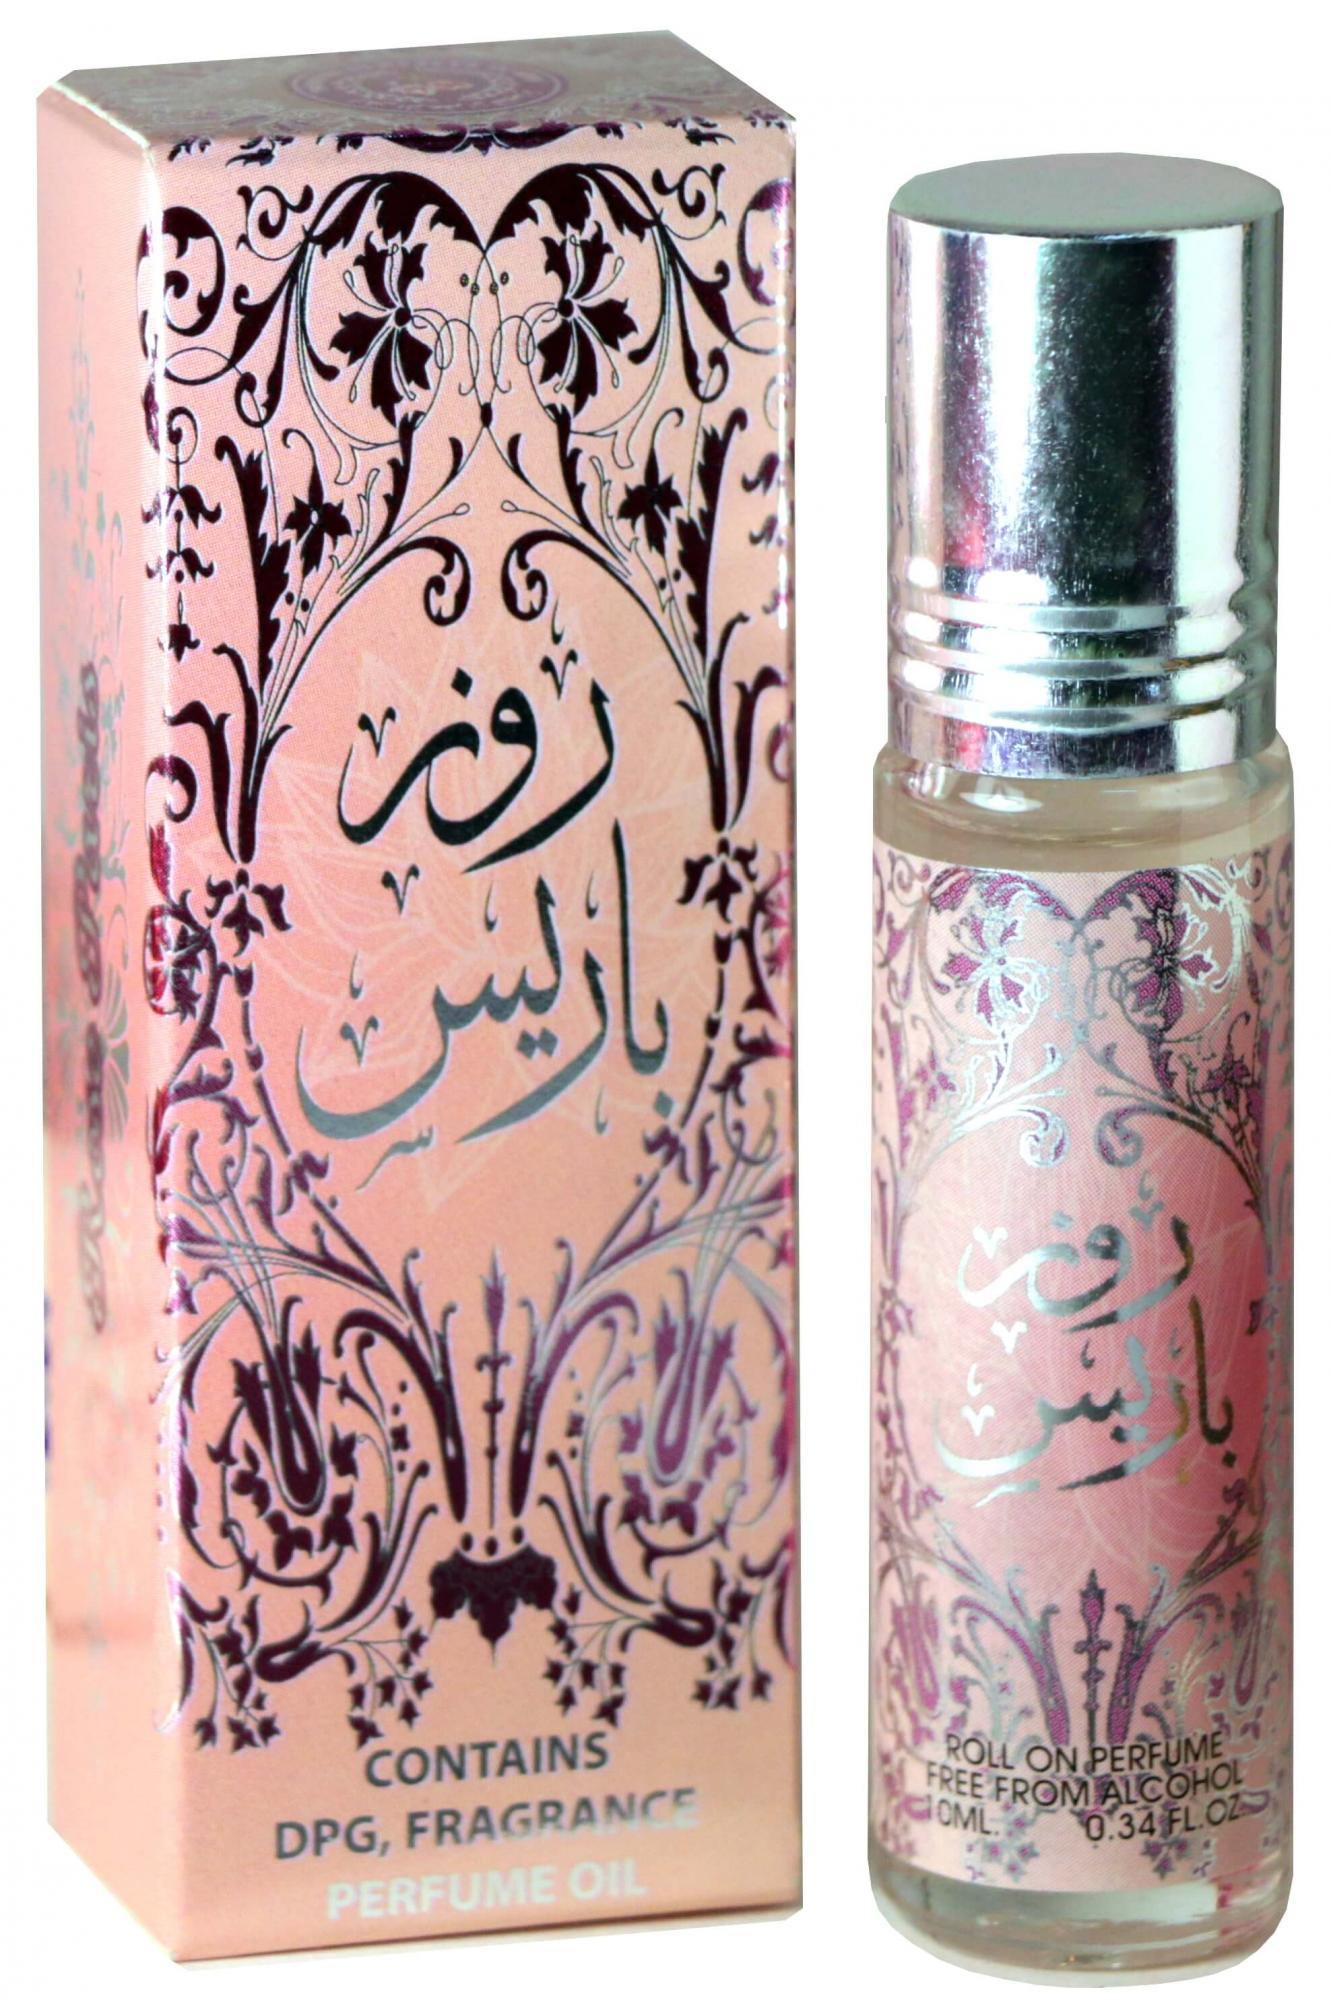 ROSE PARIS Fragrance Perfume Oil, Ard Al Zaafaran Trading (Арабские масляные духи ПАРИЖСКАЯ РОЗА, Ард Аль Заафаран), 10 мл.